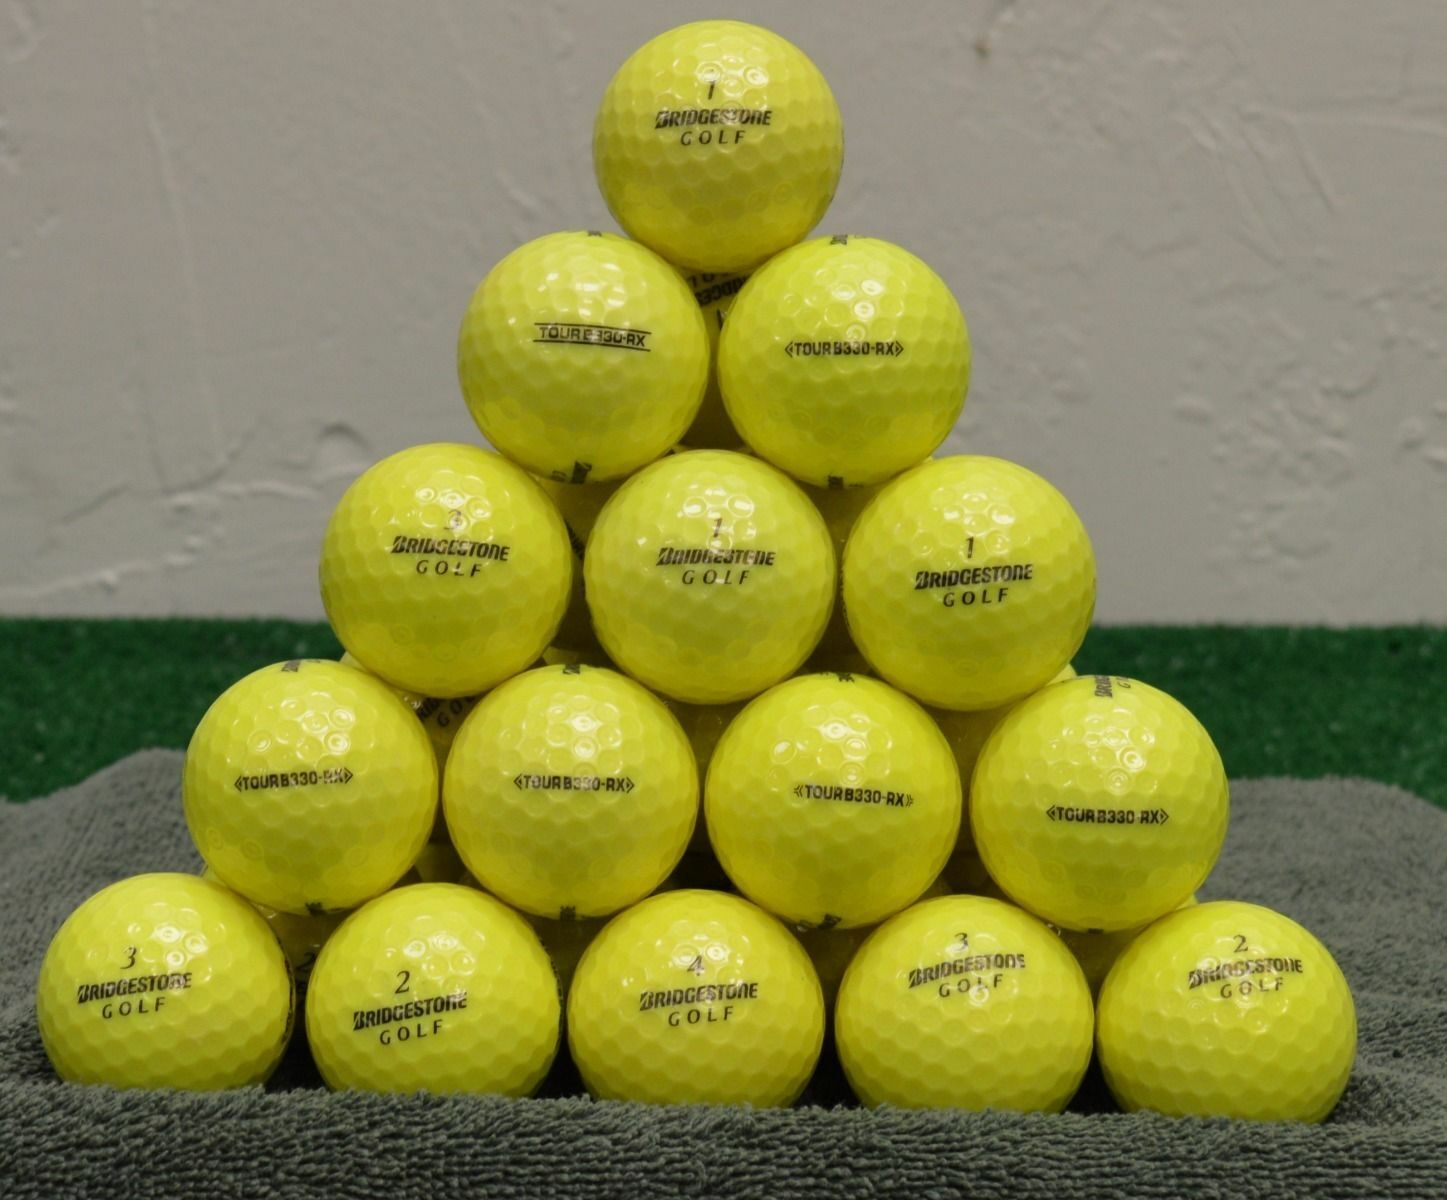 36 Bridgestone B330RX 5A Yellow Golf Balls